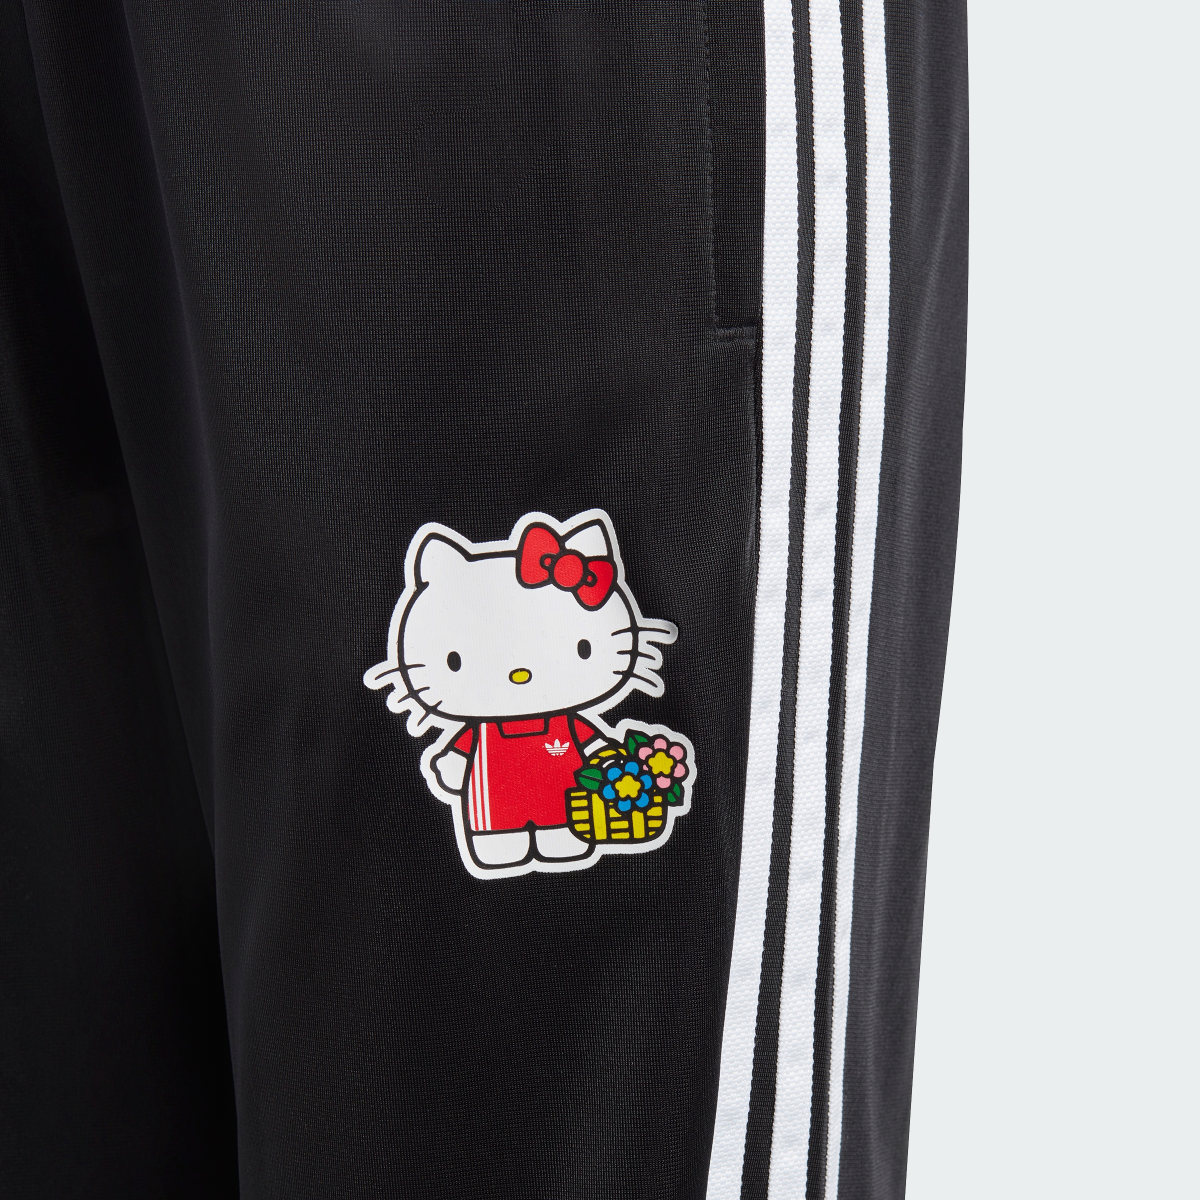 Adidas Originals x Hello Kitty Pants. 5